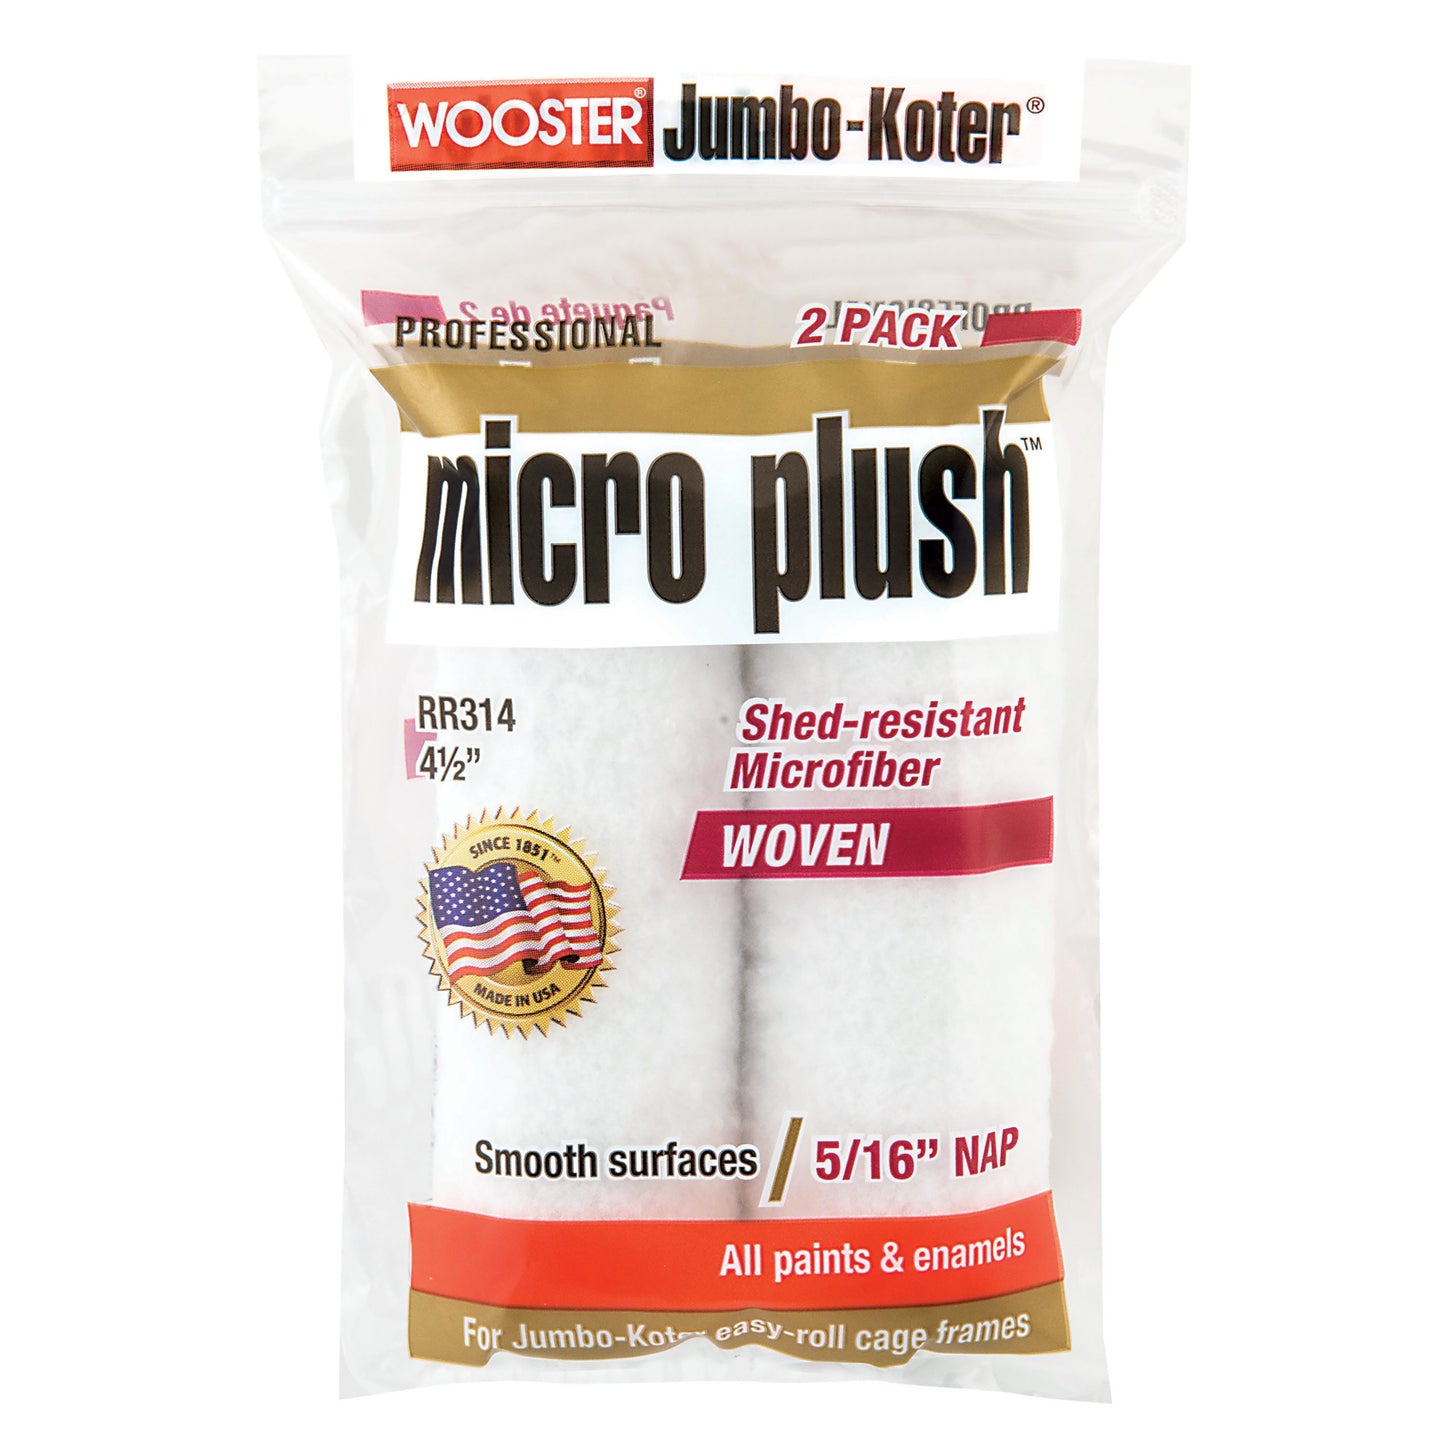 Wooster Jumbo-Koter Micro Plush Microfiber Roller Cover 6.5x5/16 2 Pack